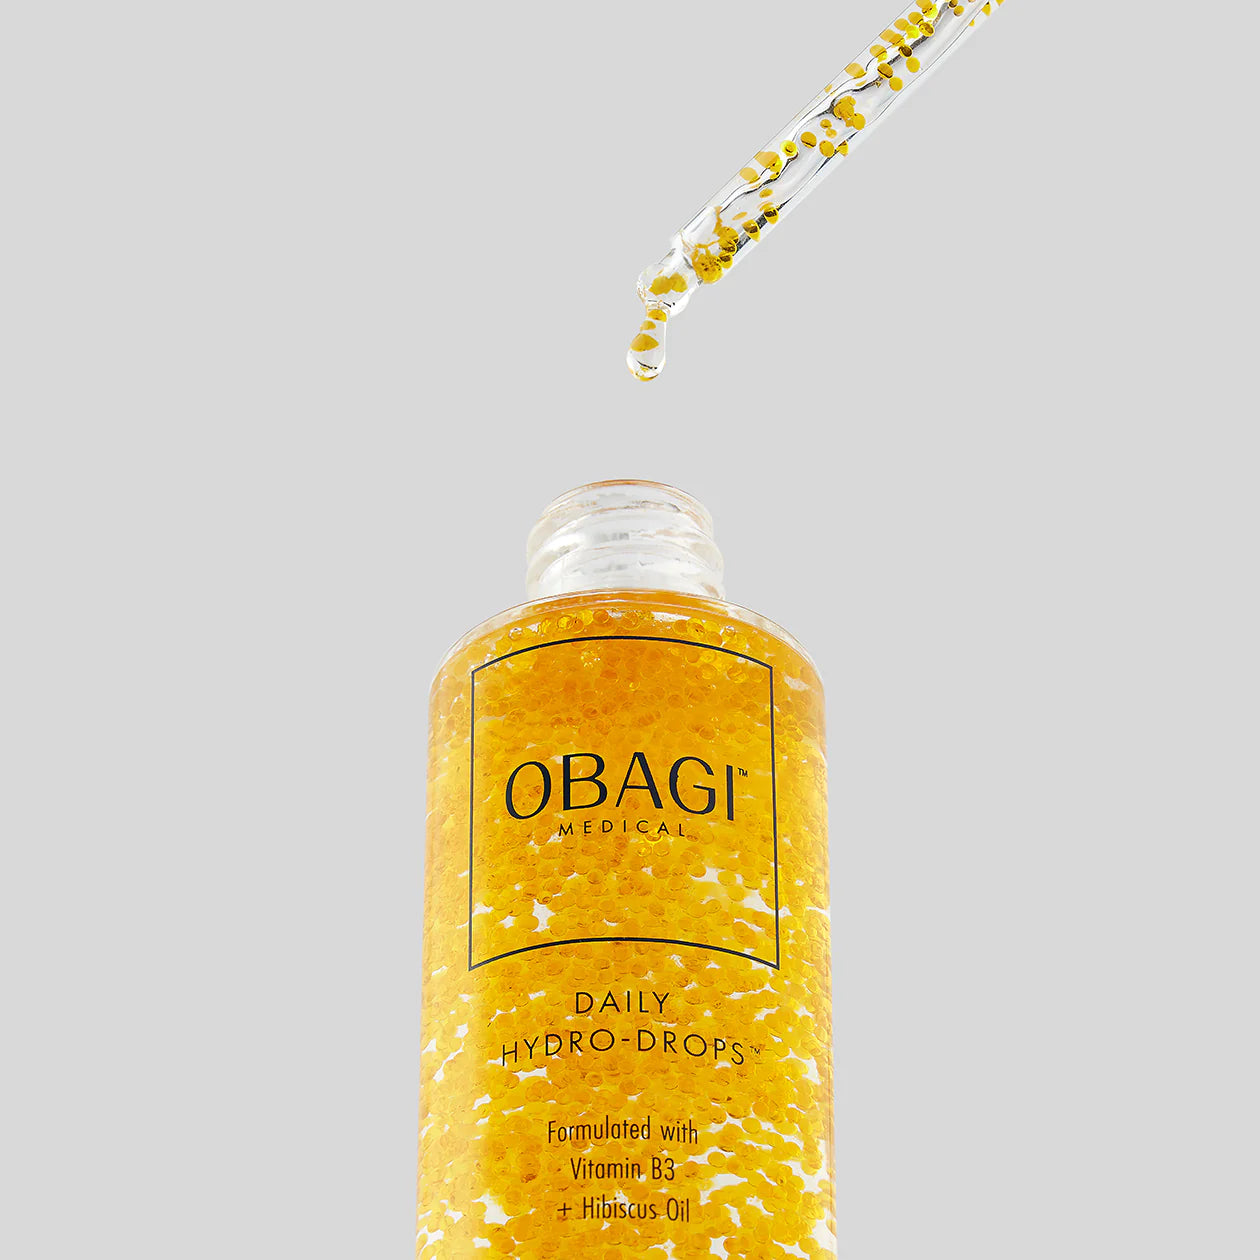 Obagi Medical Daily Hydro-Drops